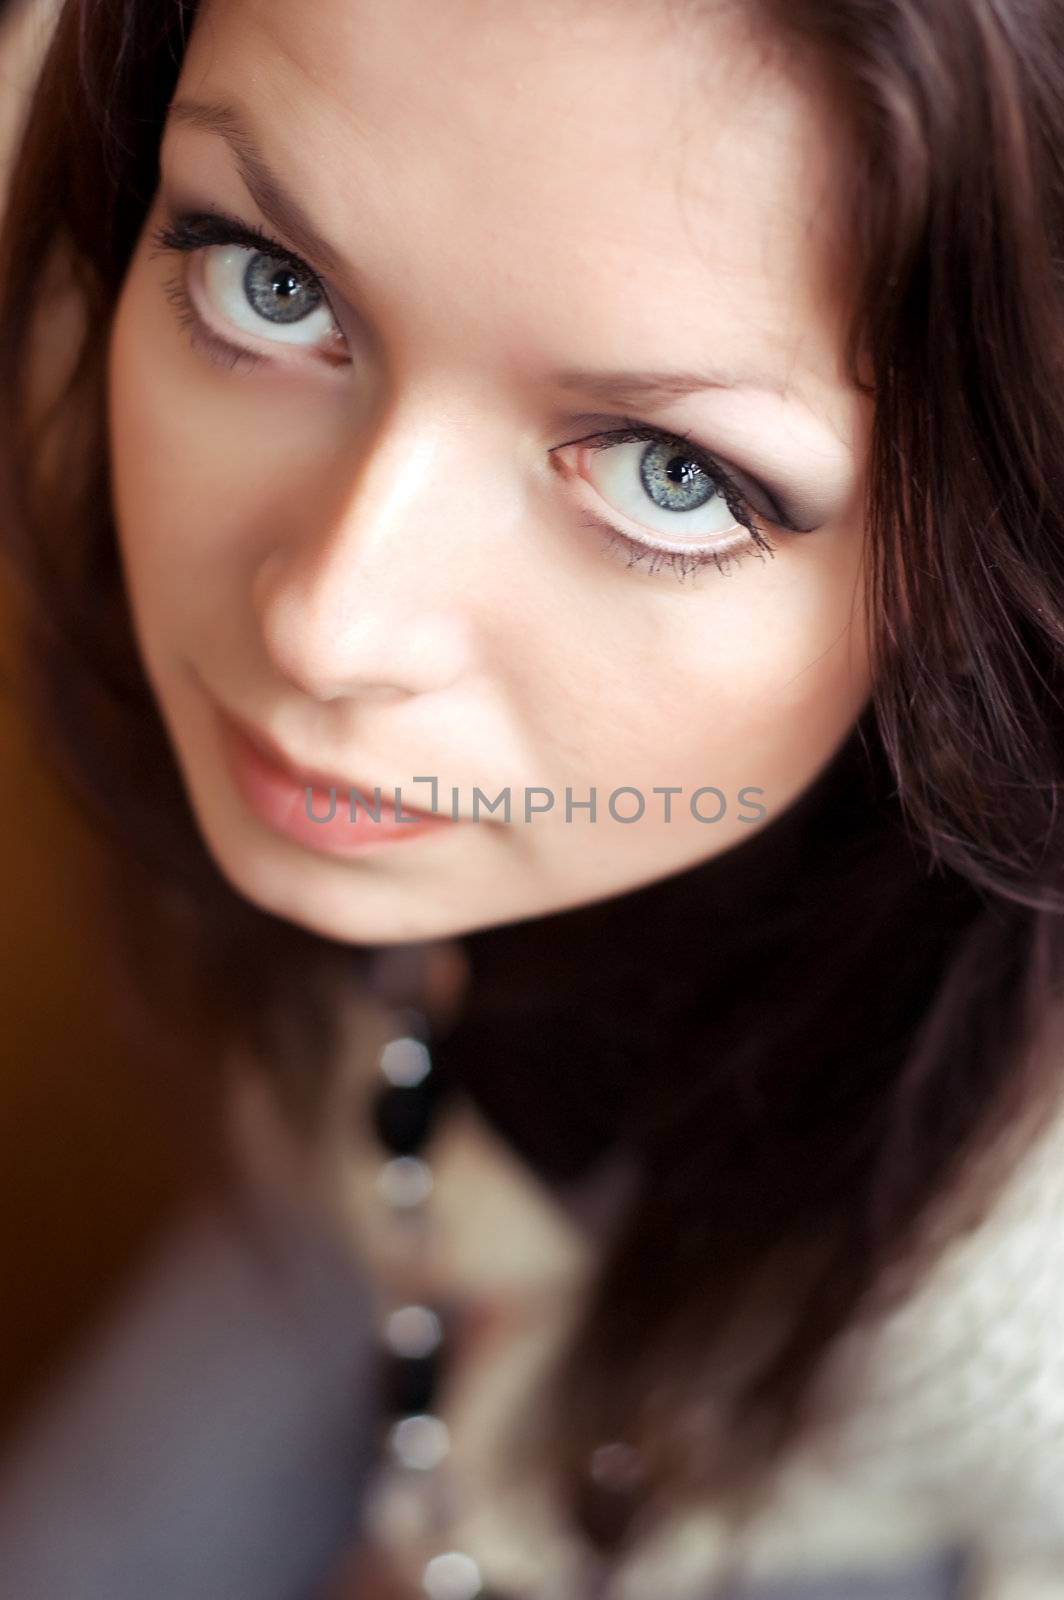 beautiful woman detail close-up, eyes focused